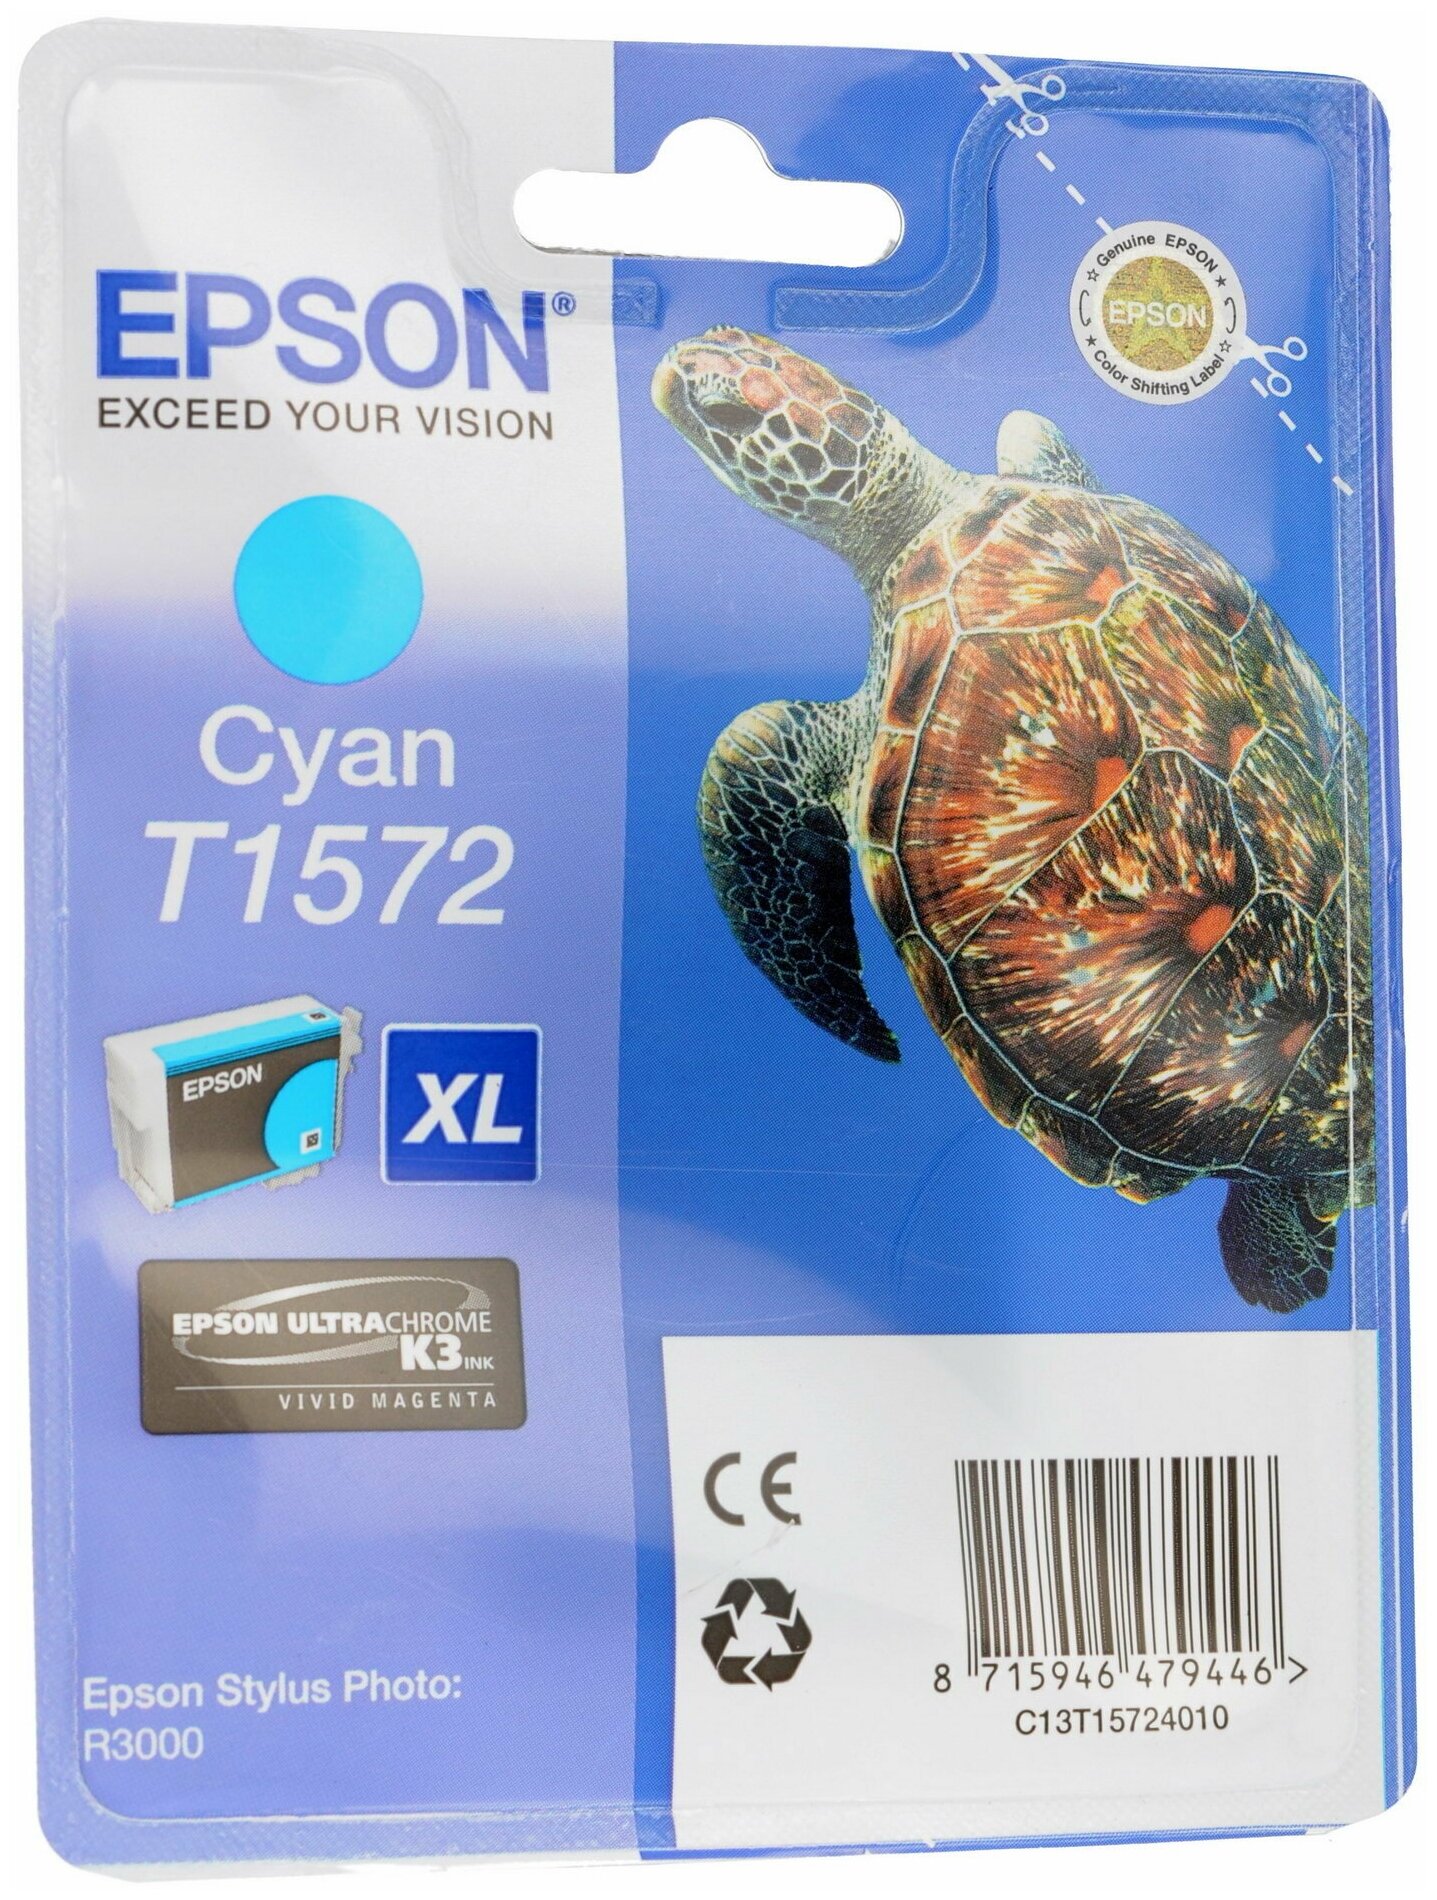 Картридж для струйного принтера EPSON T1572 Cyan C13T15724010, 850 стр, 25,9 мл. голубой